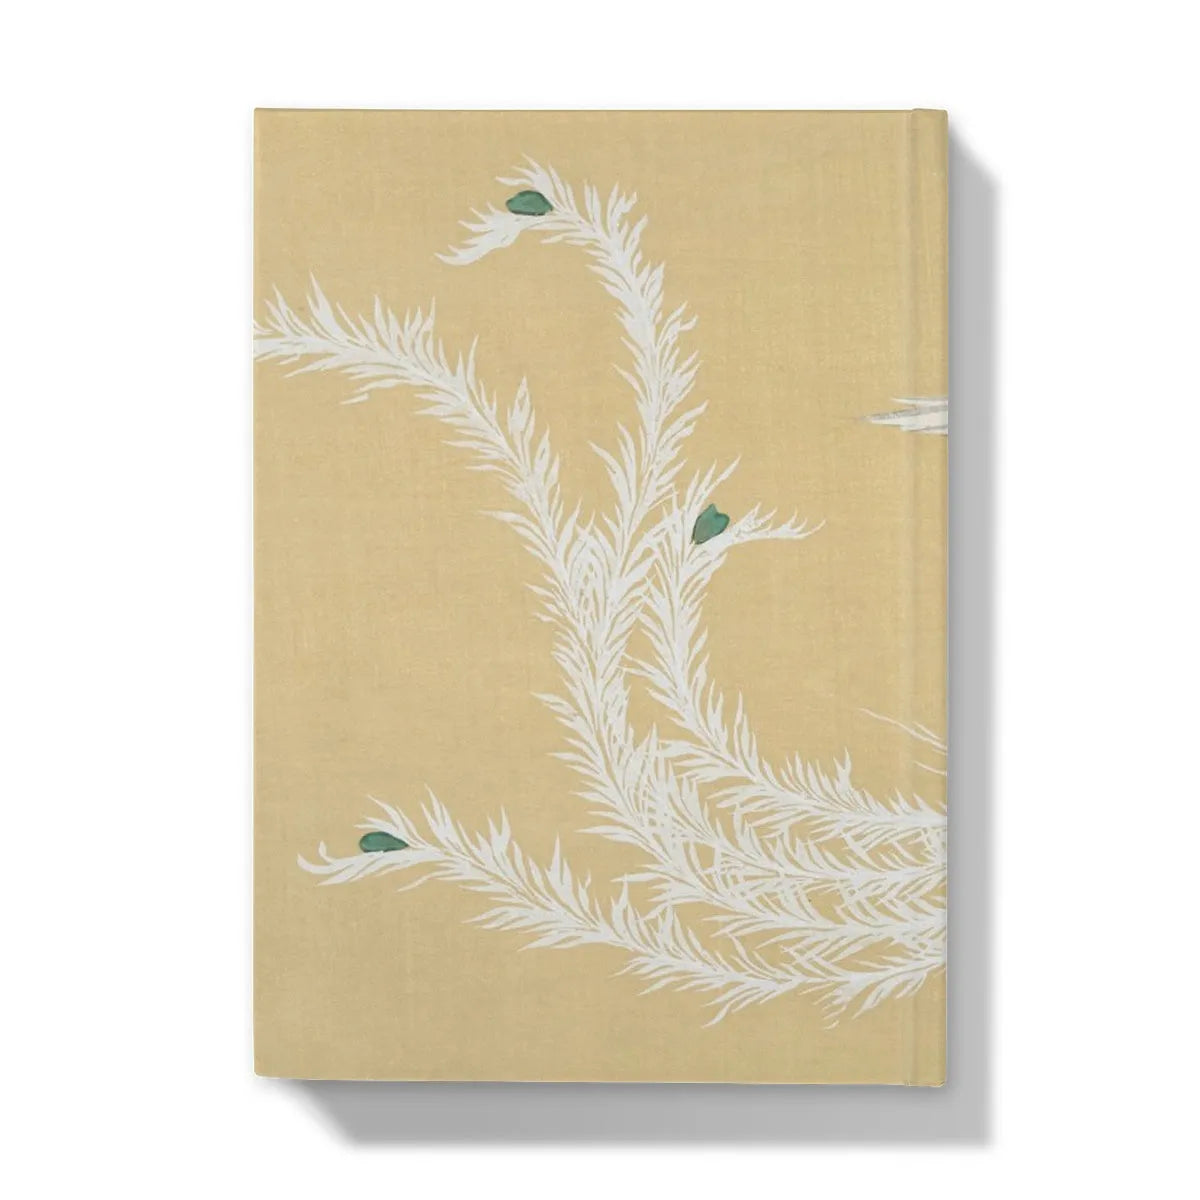 Phoenix By Kamisaka Sekka Hardback Journal - Notebooks & Notepads - Aesthetic Art